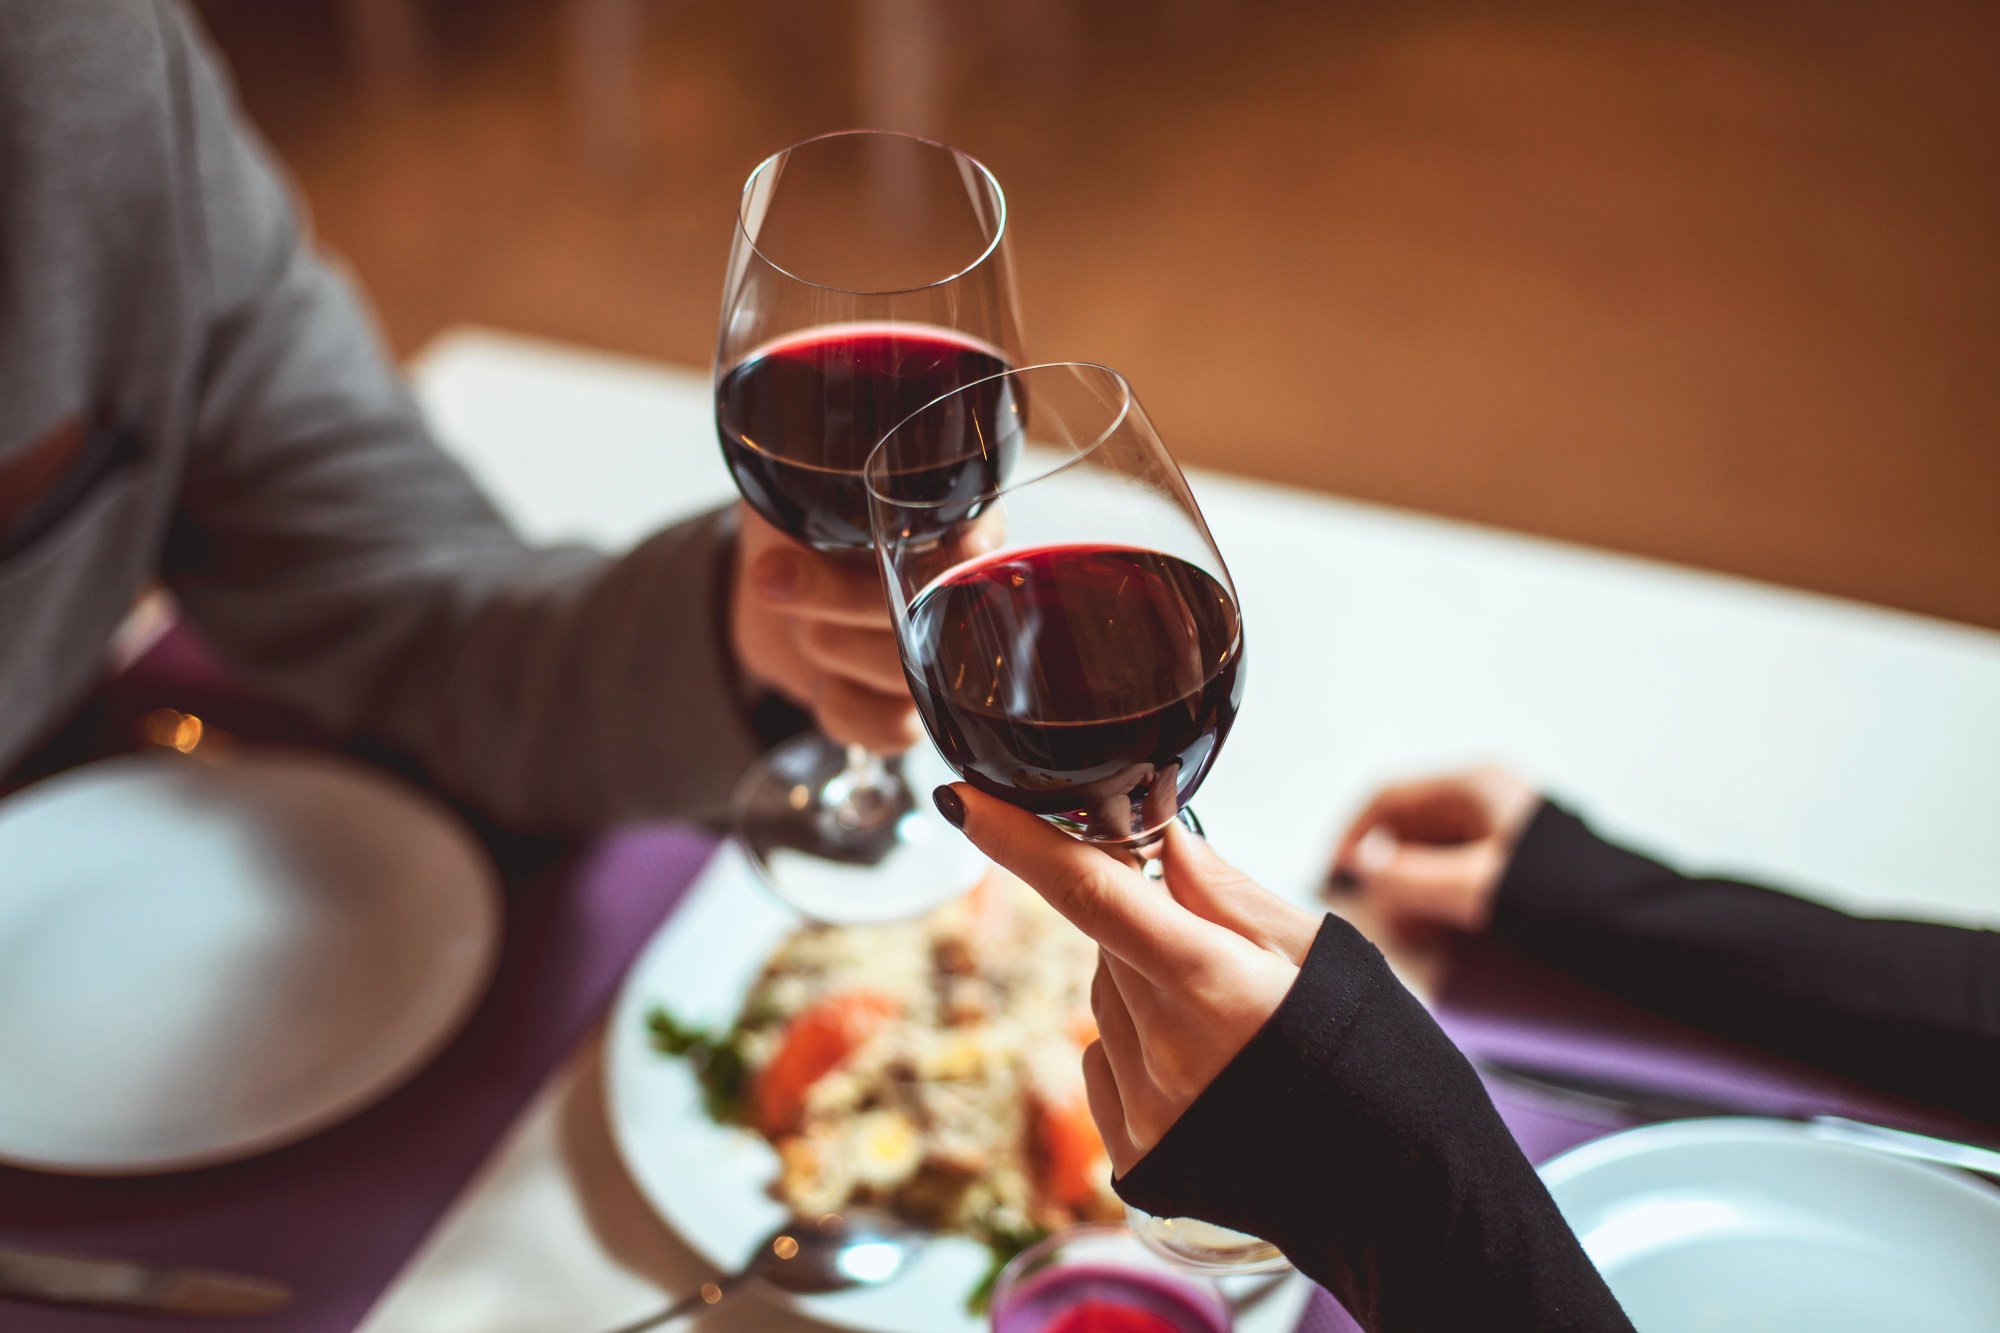 Пара бокалов вина. Бокал вина. Бокал вина на столе в ресторане. Бокал красного вина. Романтический ужин в ресторане.